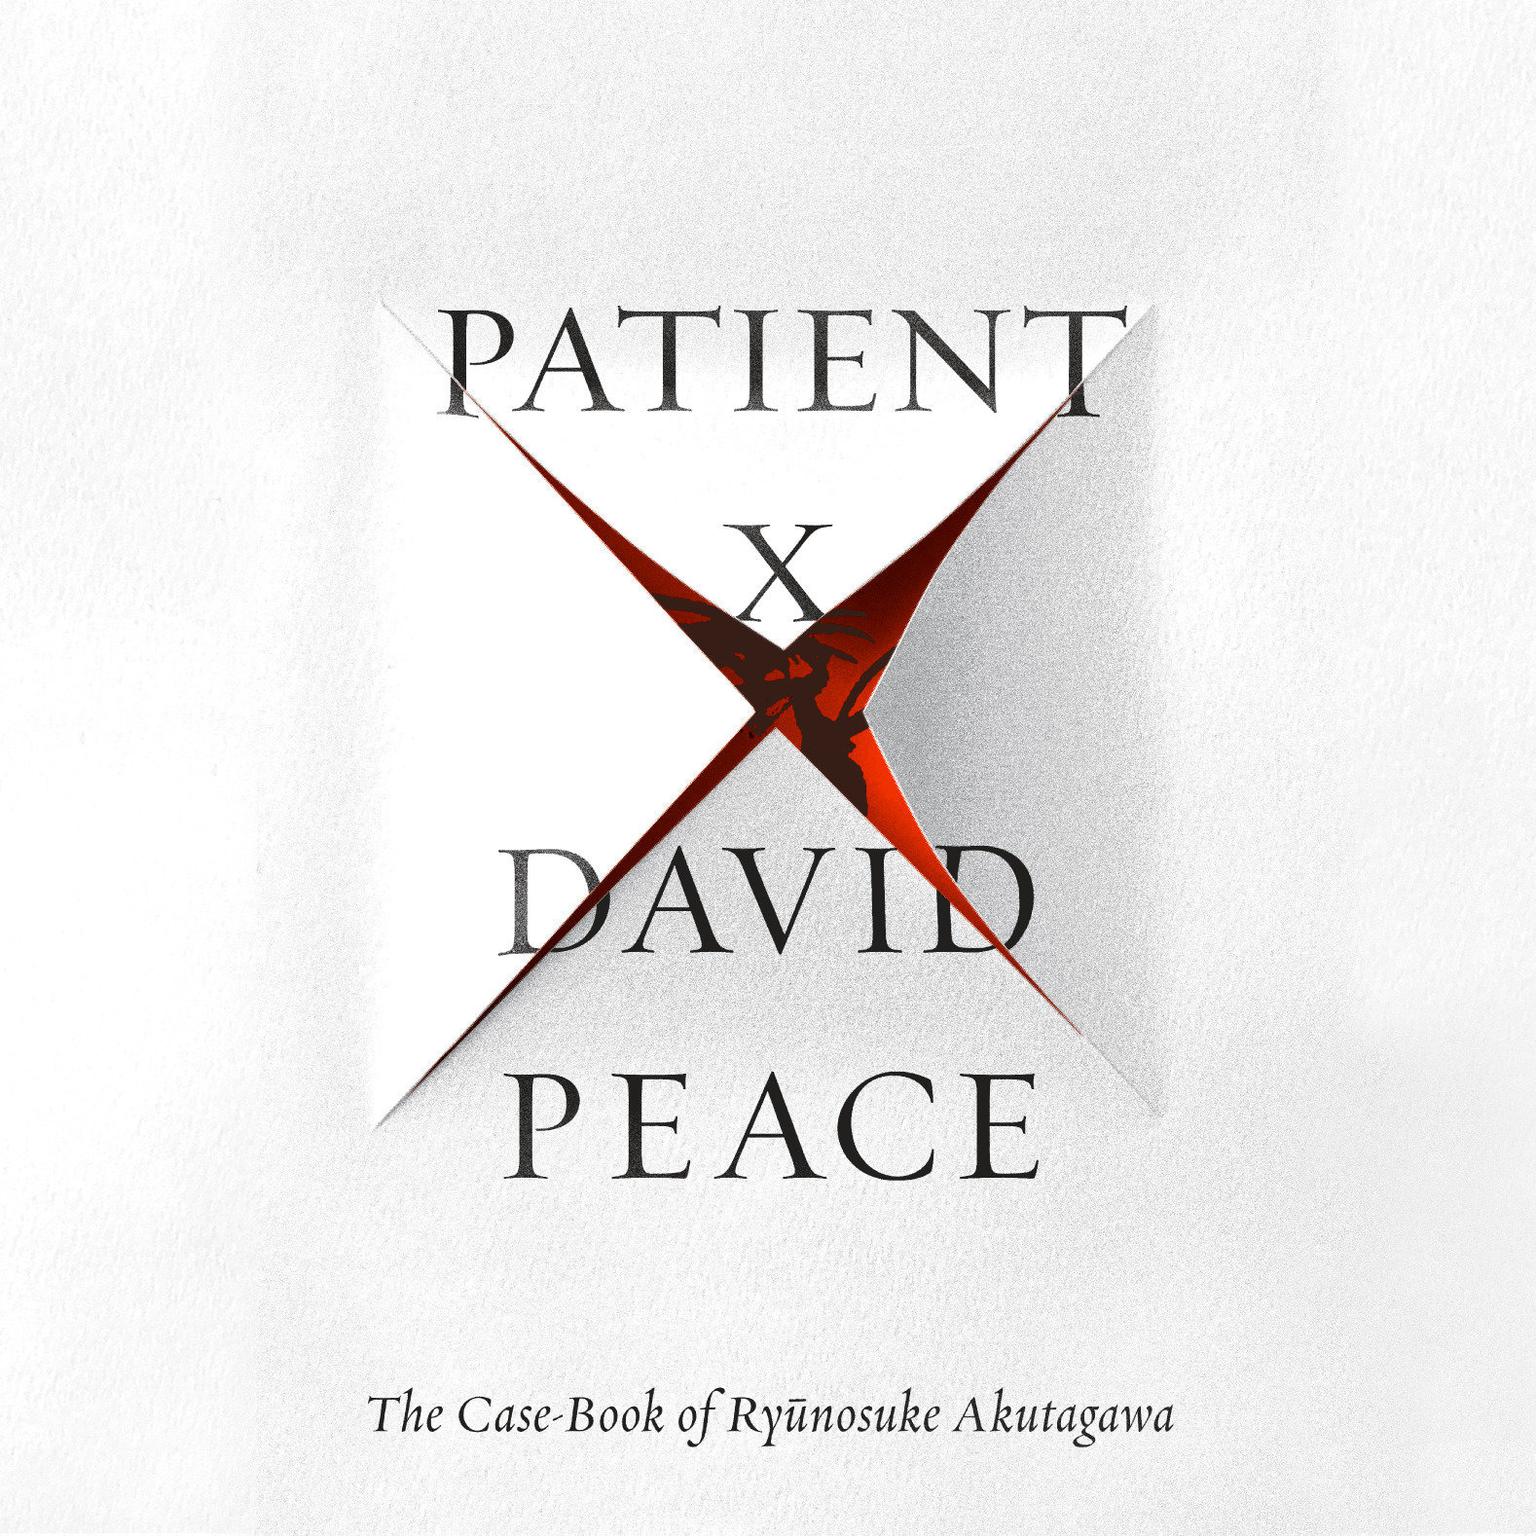 Patient X: The Case-Book of Ryunosuke Akutagawa Audiobook, by David Peace